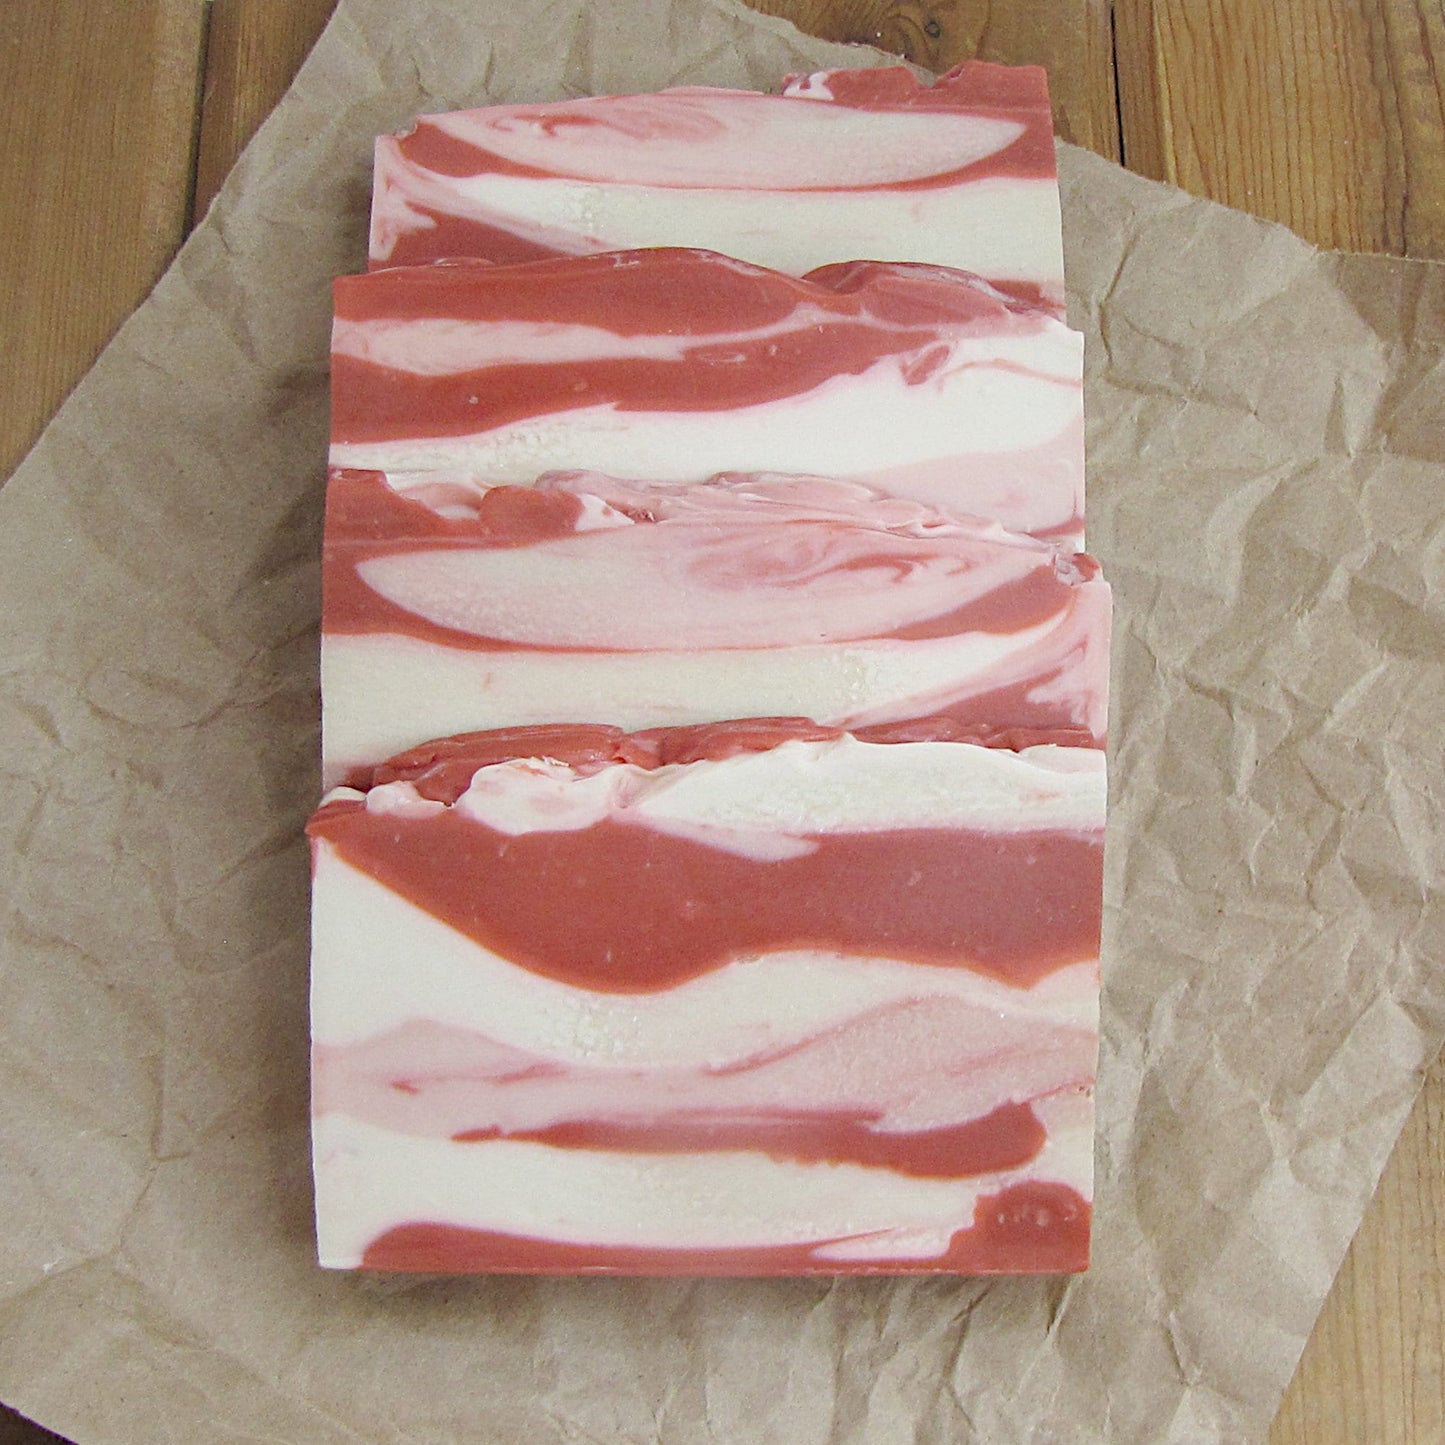 Maple Glazed Bacon, Artisan Soap